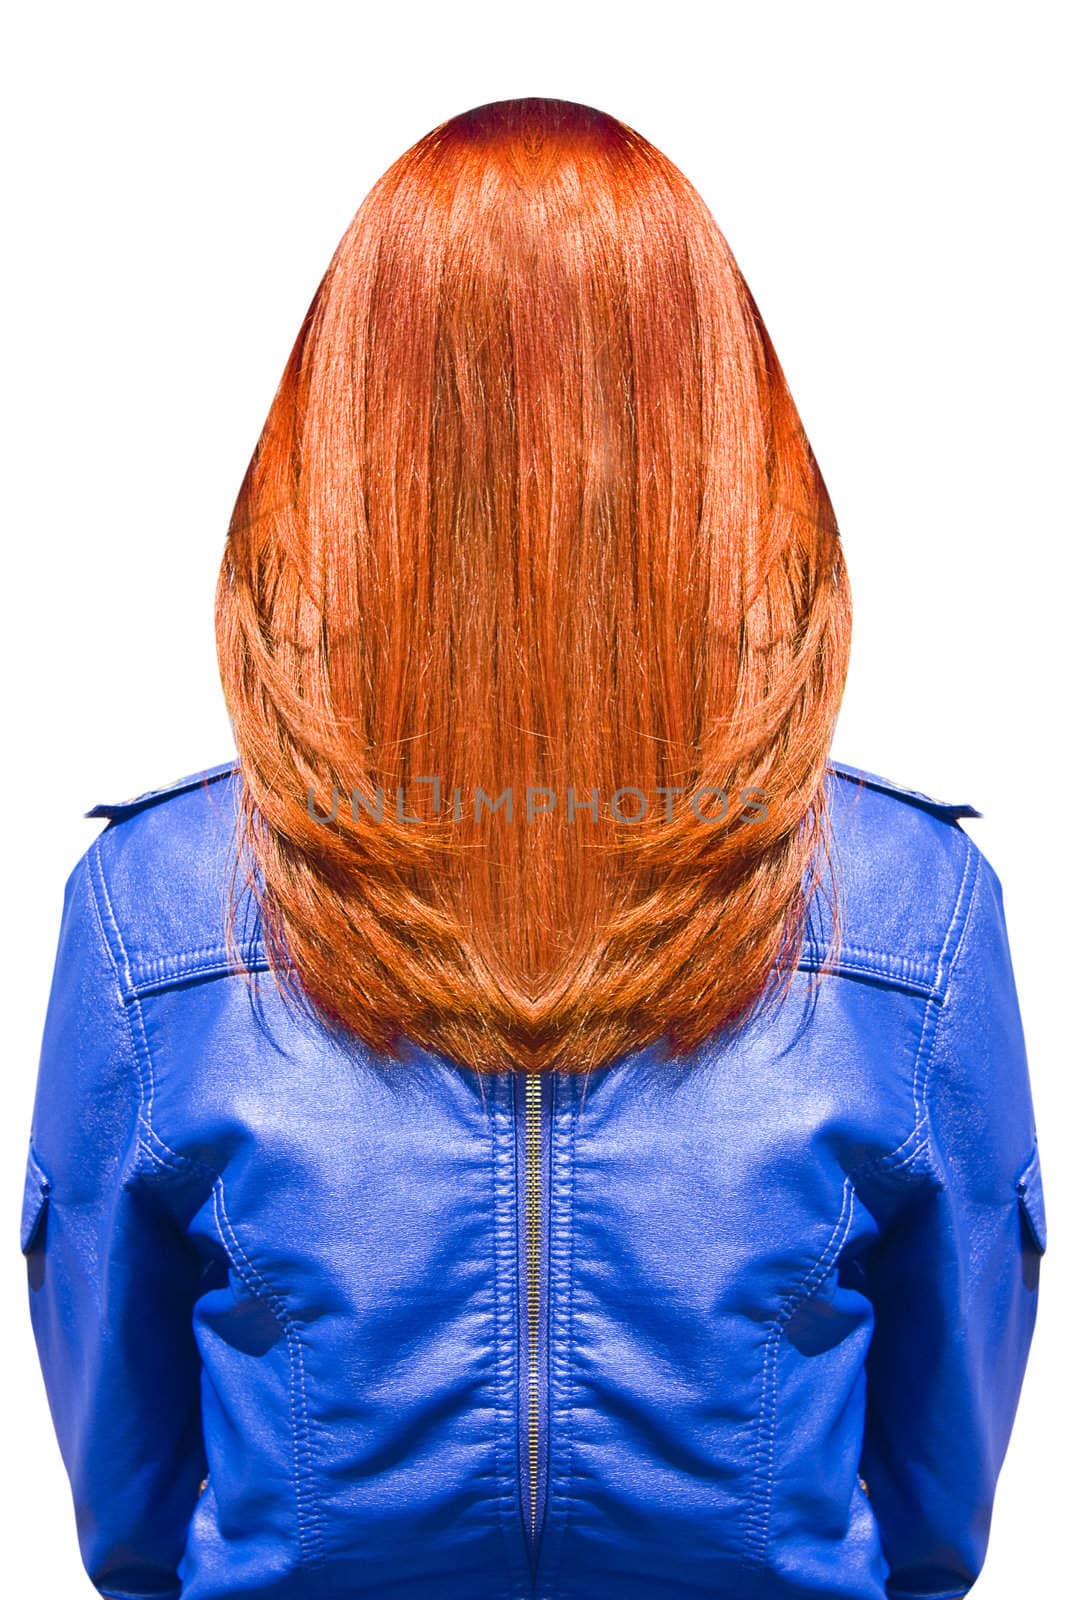 Red-hair woman by MartMartov